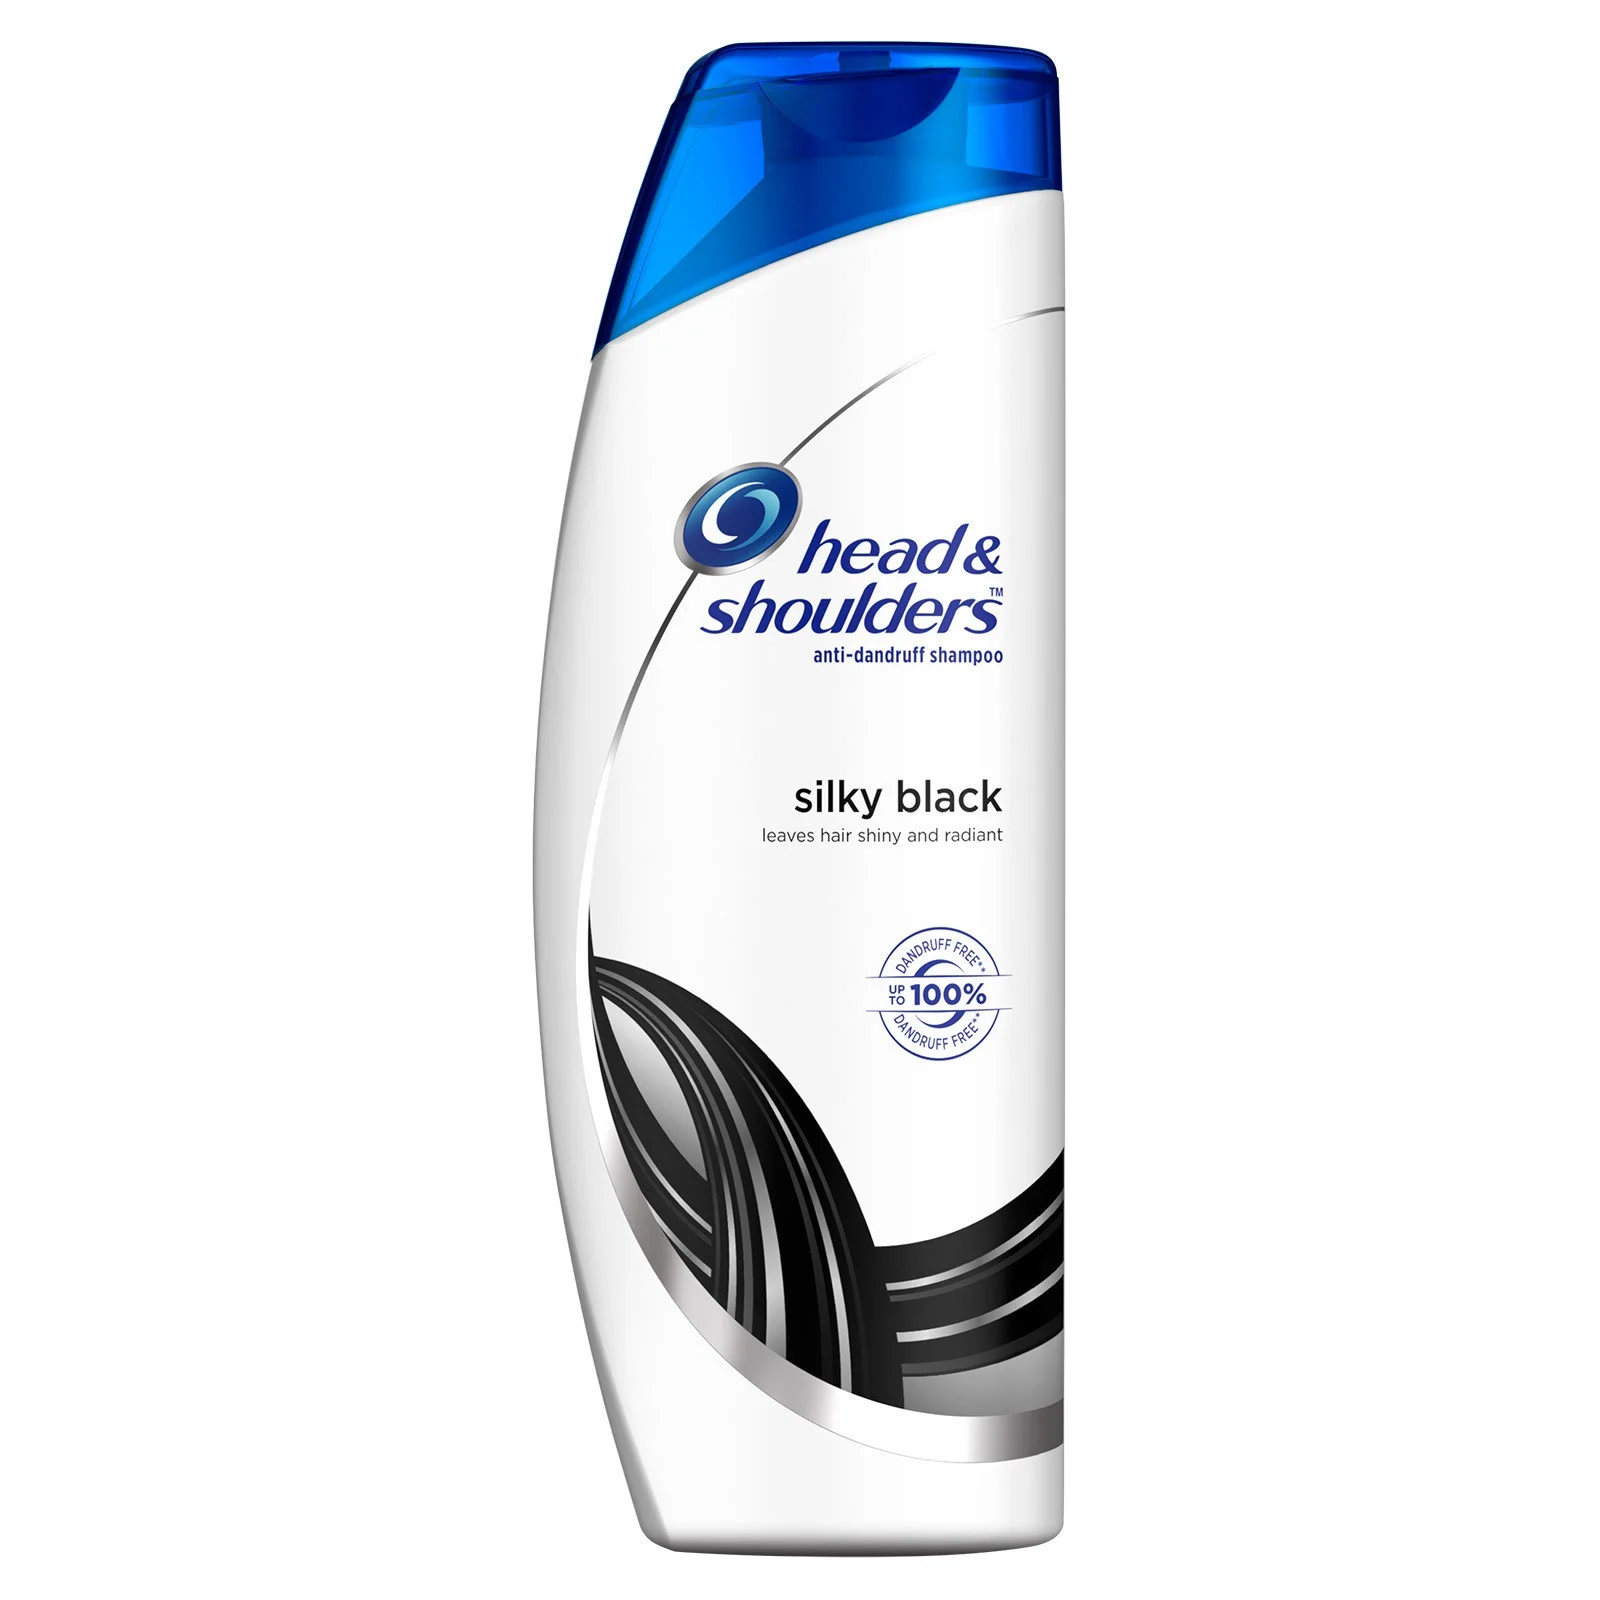 5. Silky black anti-dandruff shampoo: